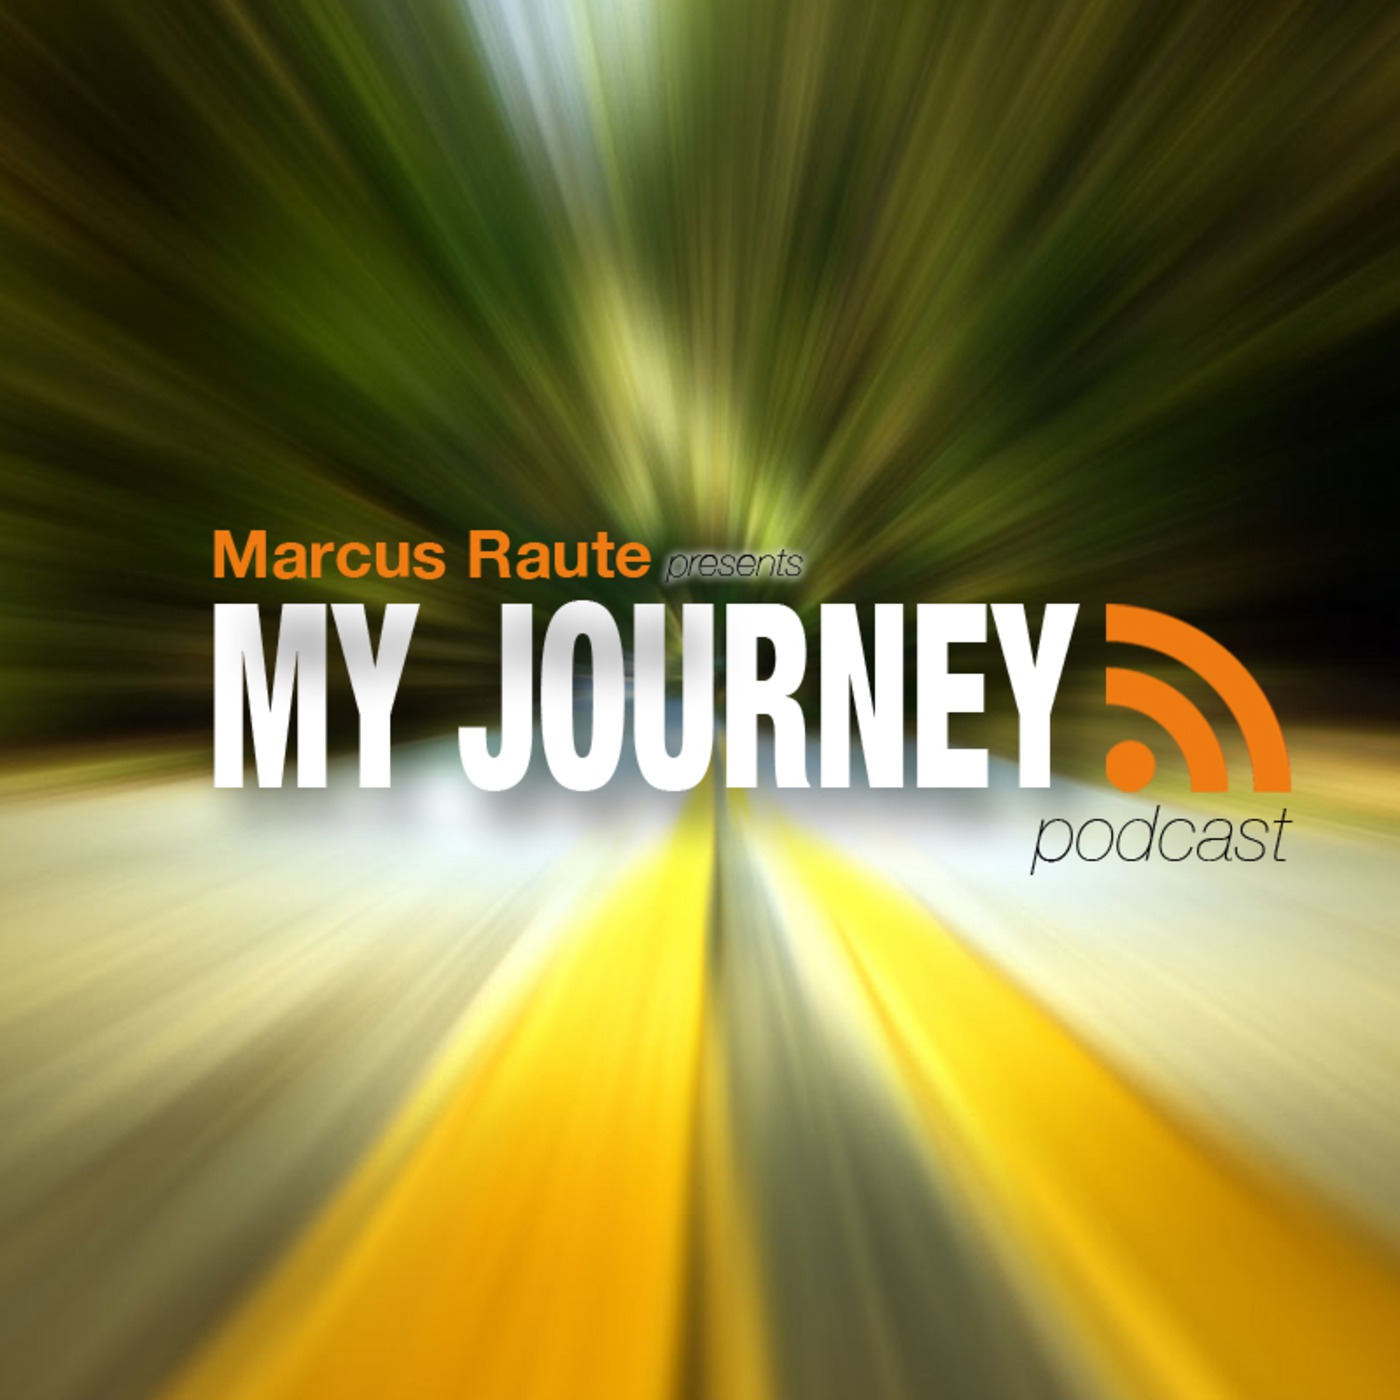 Marcus Raute pres. "My Journey" // Podcast